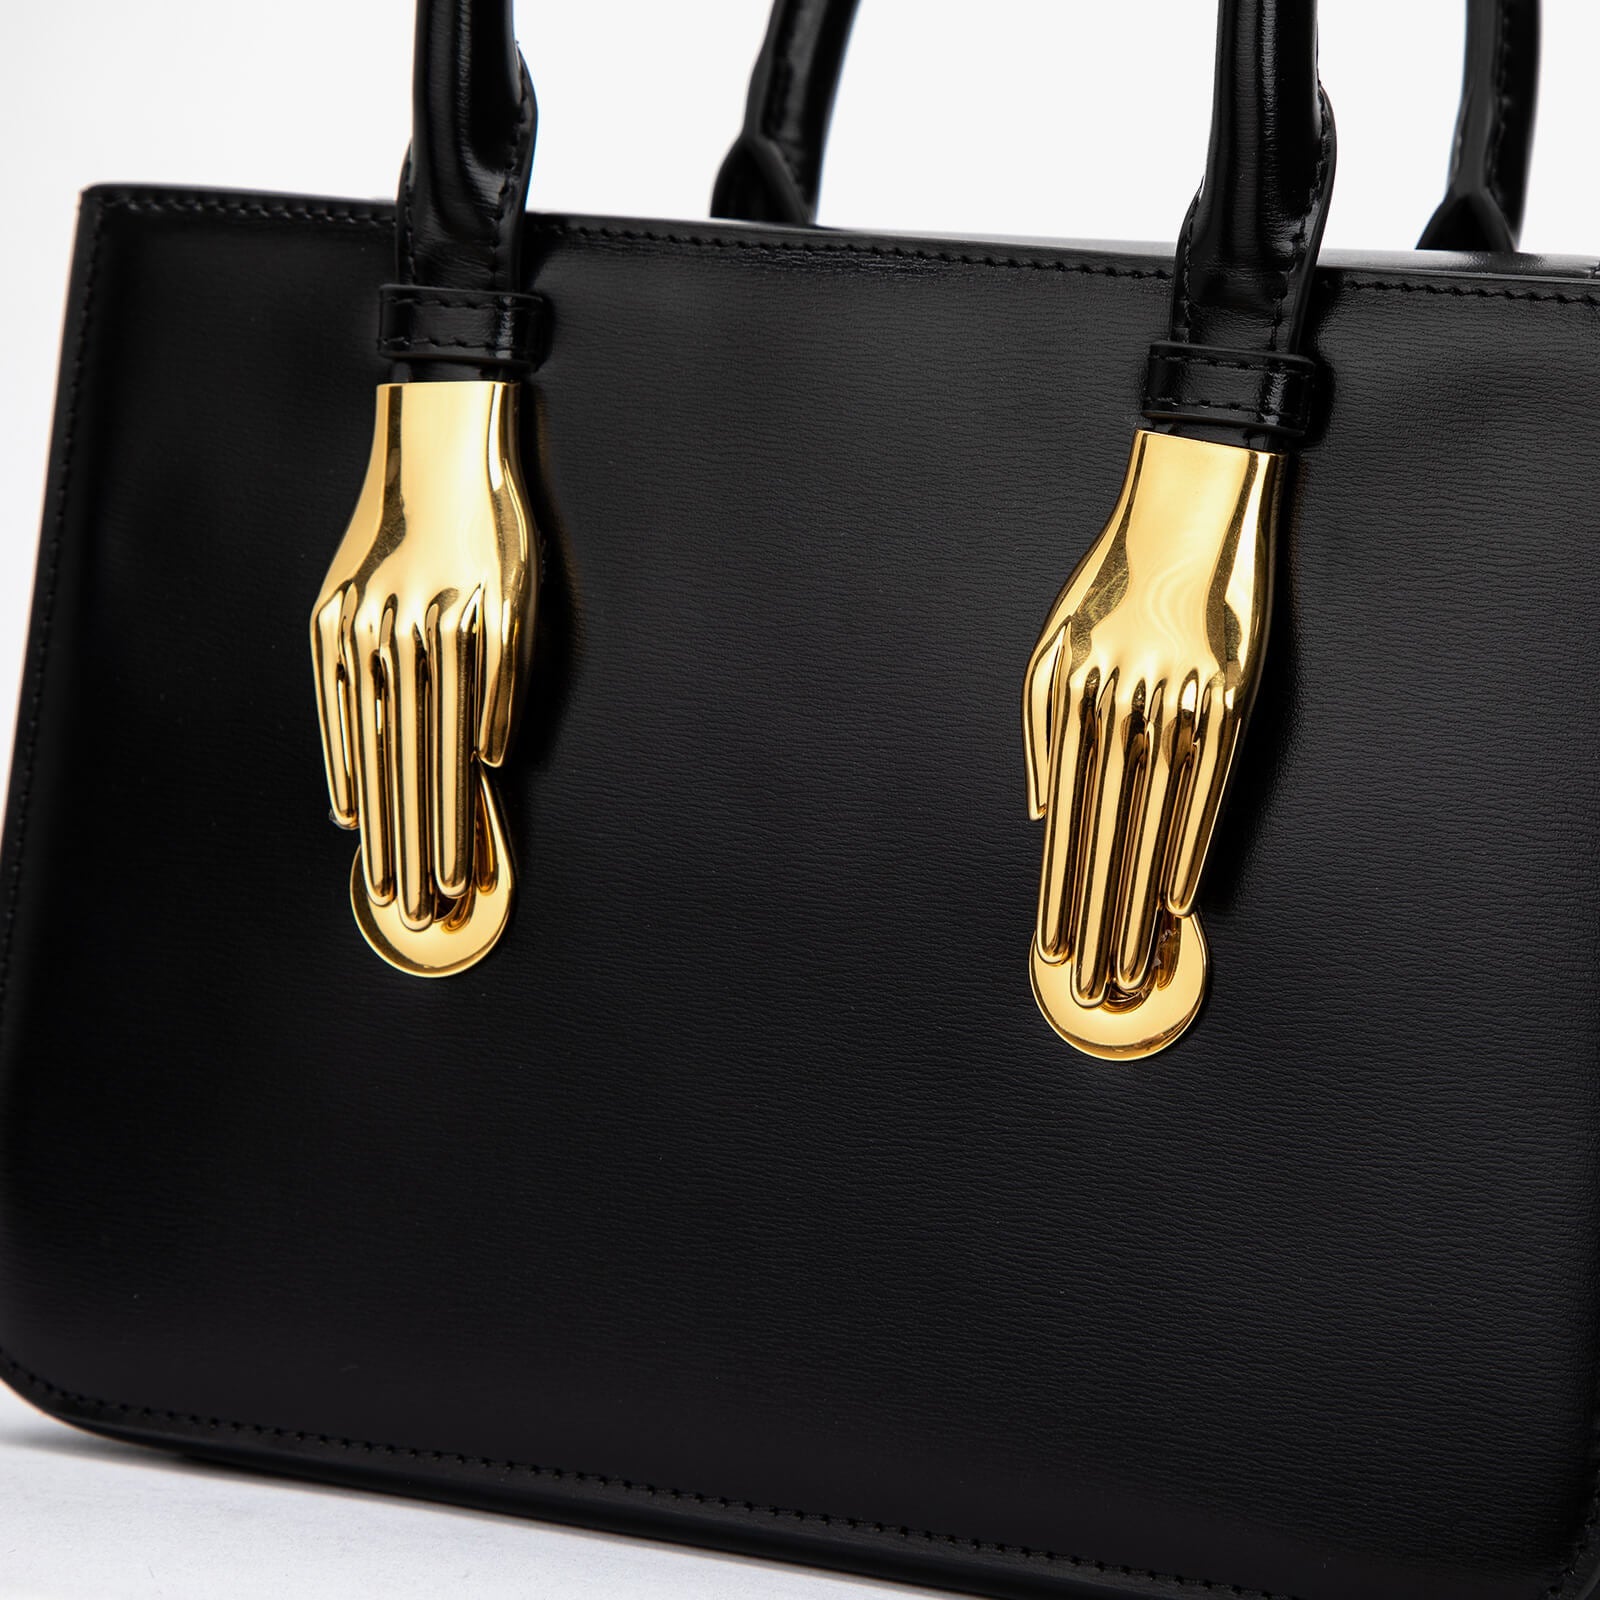 Attache case 'Dublin' 15 inch black small with combination locks - Corf  Bags Leatherbags